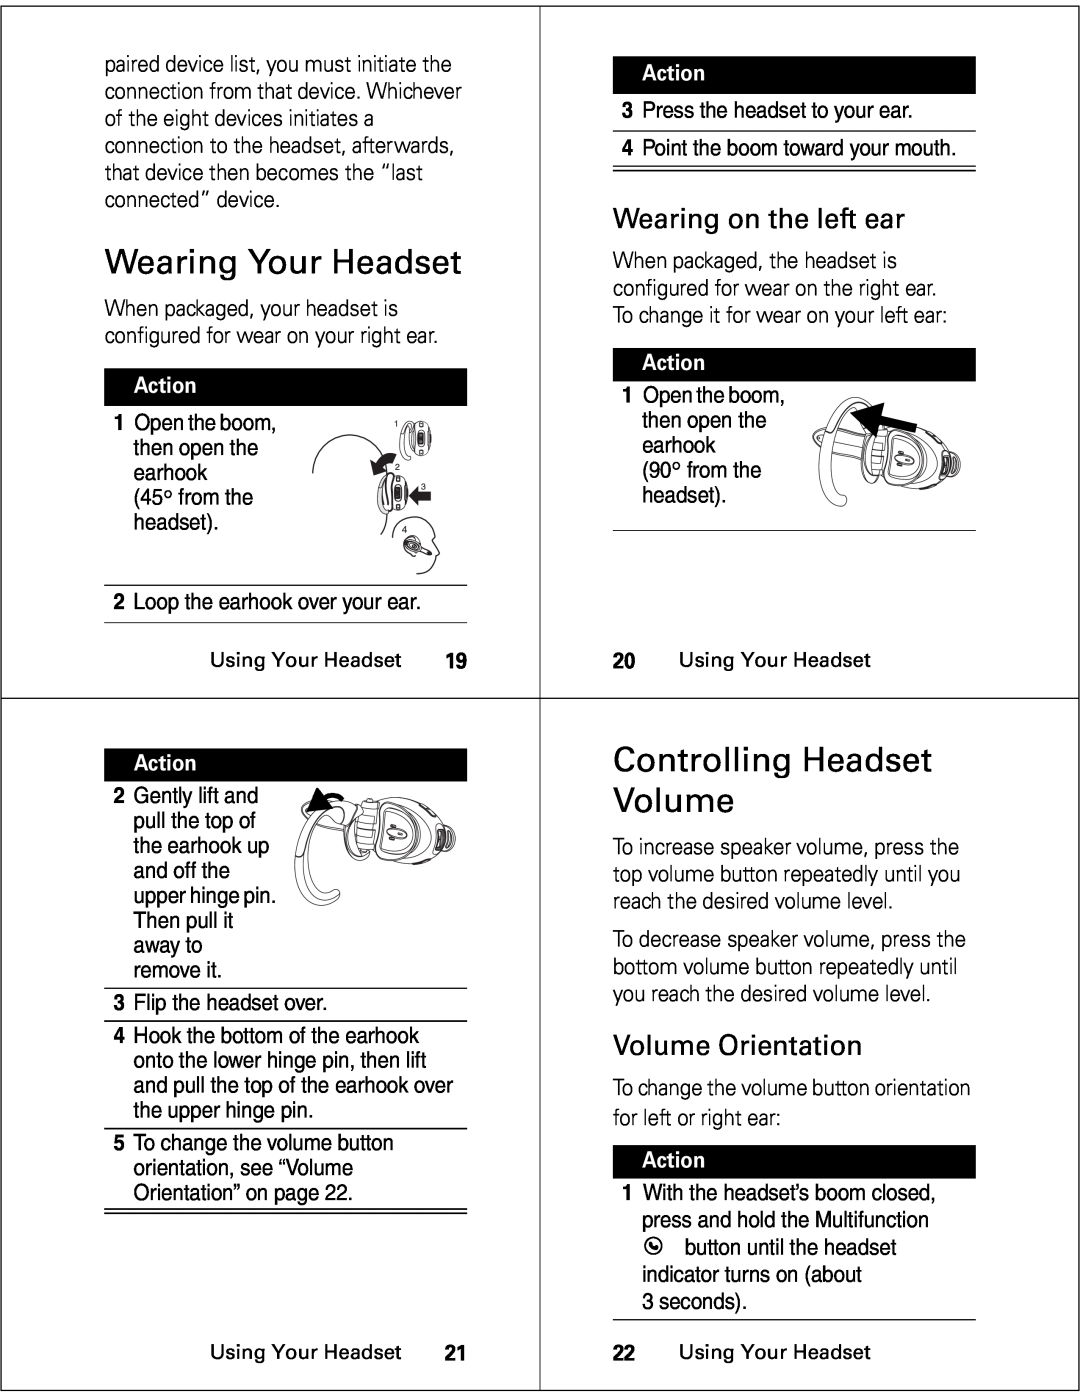 Motorola HS850 manual Wearing Your Headset, Controlling Headset, Wearing on the left ear, Volume Orientation 